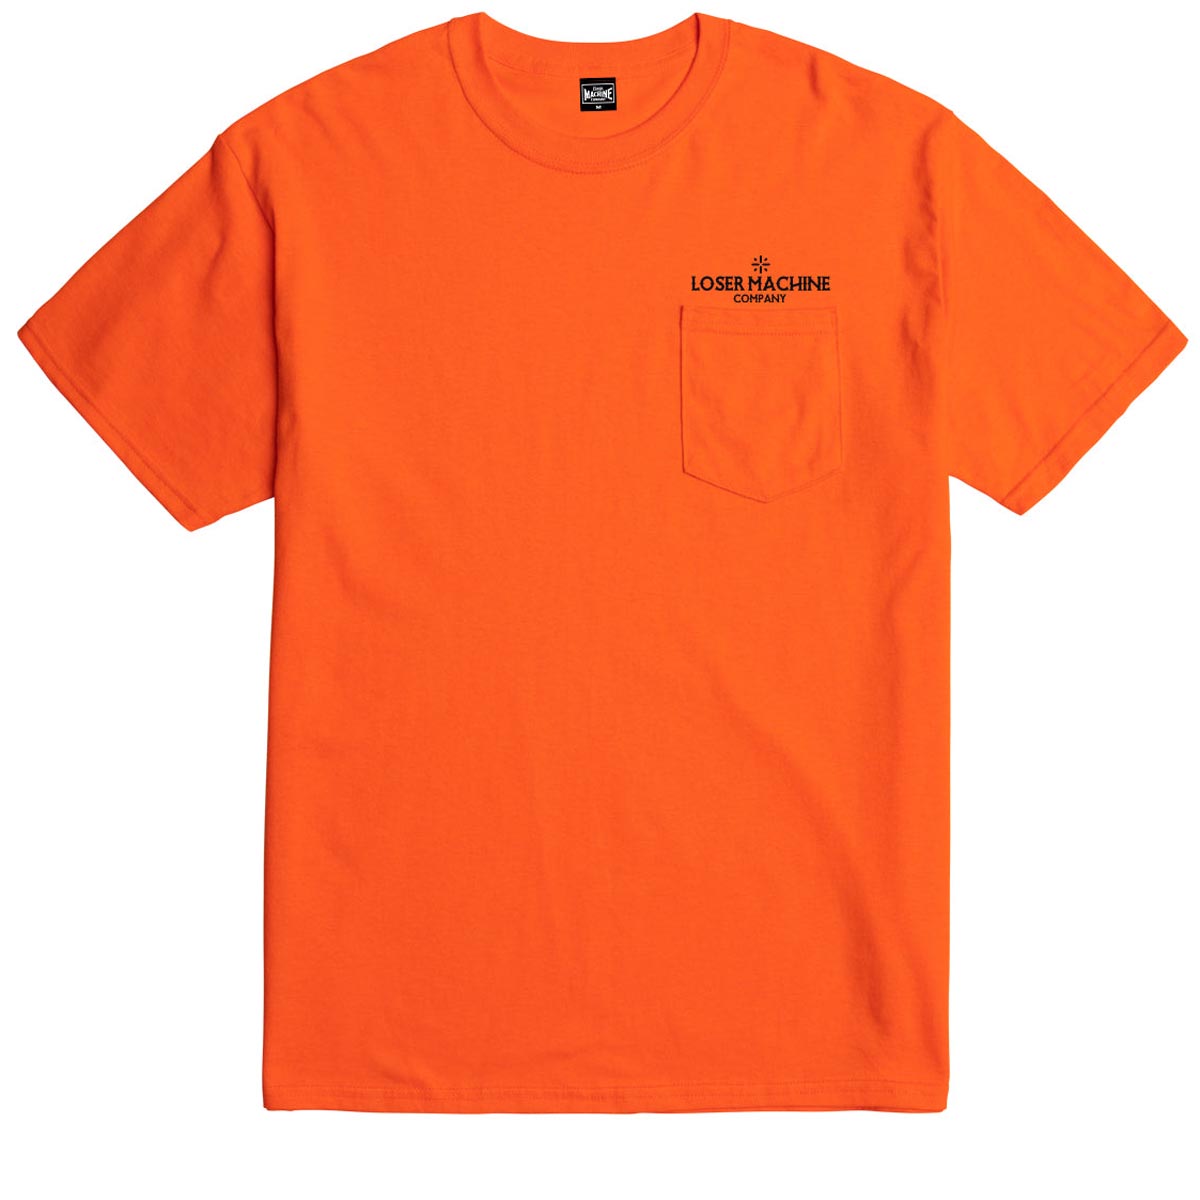 Loser Machine Impression T-Shirt - Orange image 1